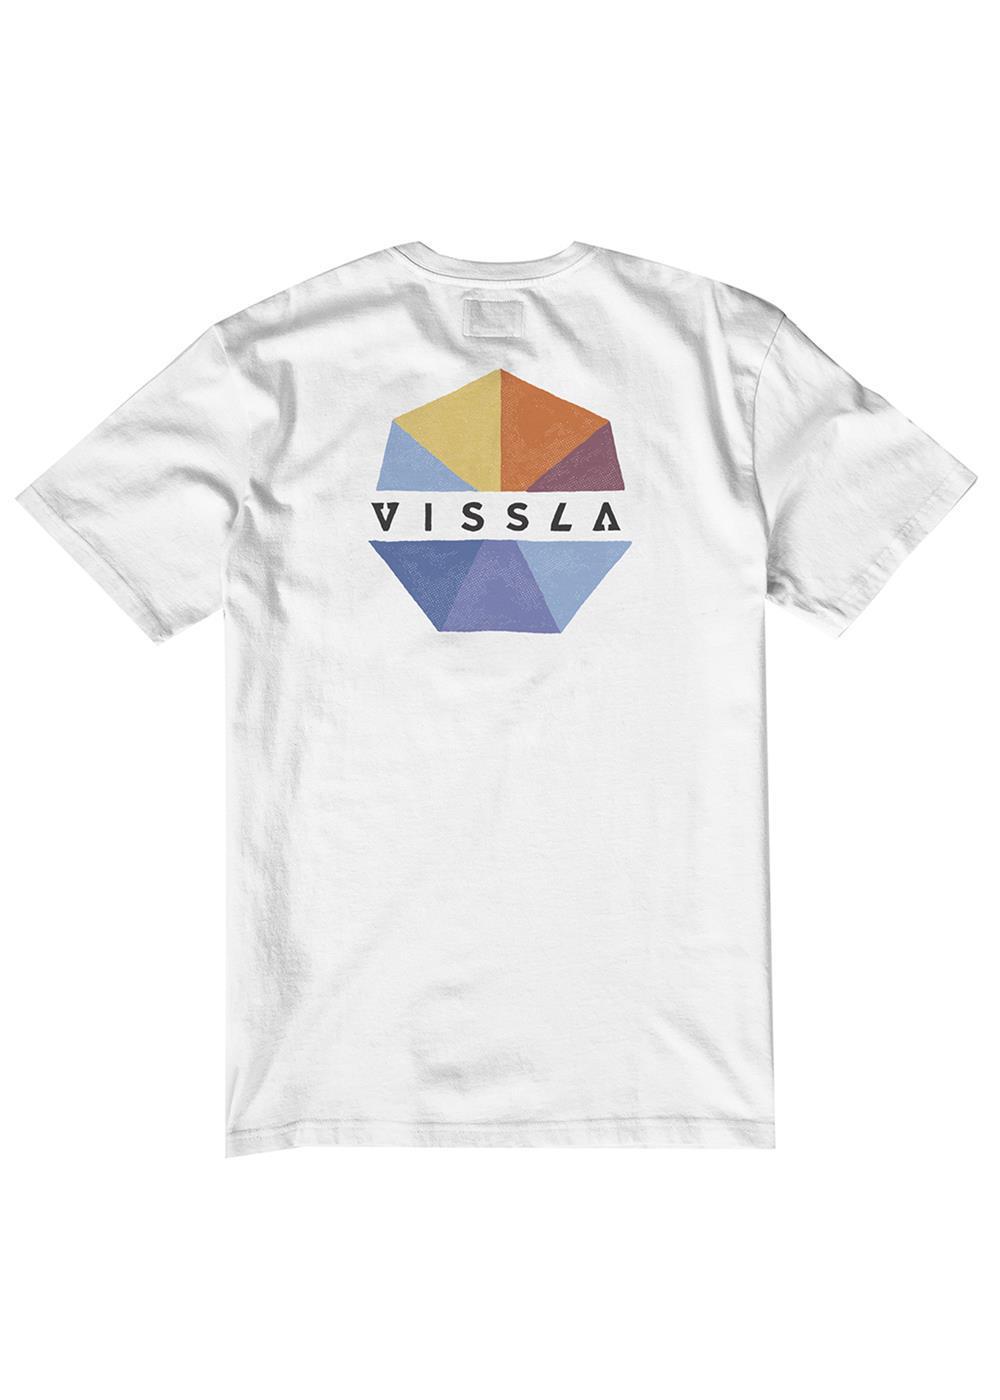 Vissla Spectrum II SS Tee (White) - KS Boardriders Surf Shop